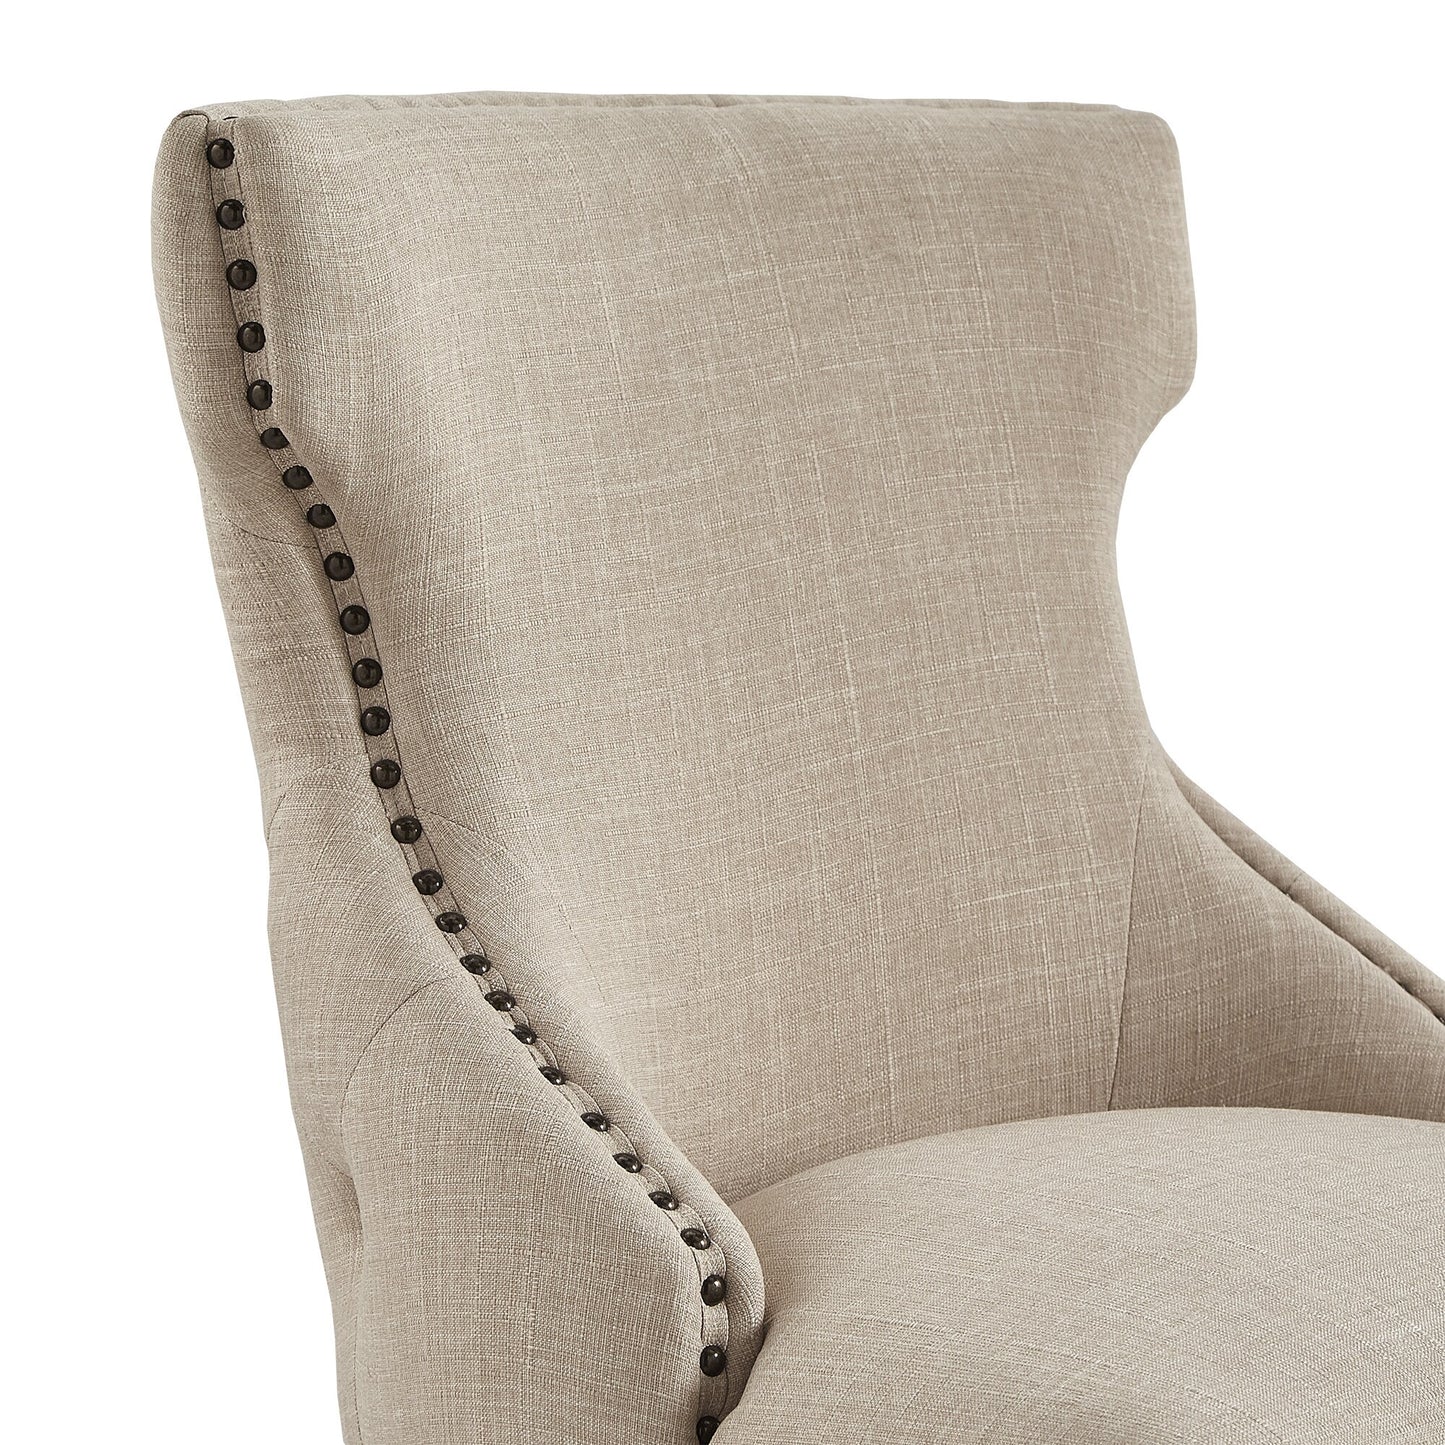 Nailhead Trim Linen Upholstered Stools (Set of 2) - Beige Linen, Counter Height